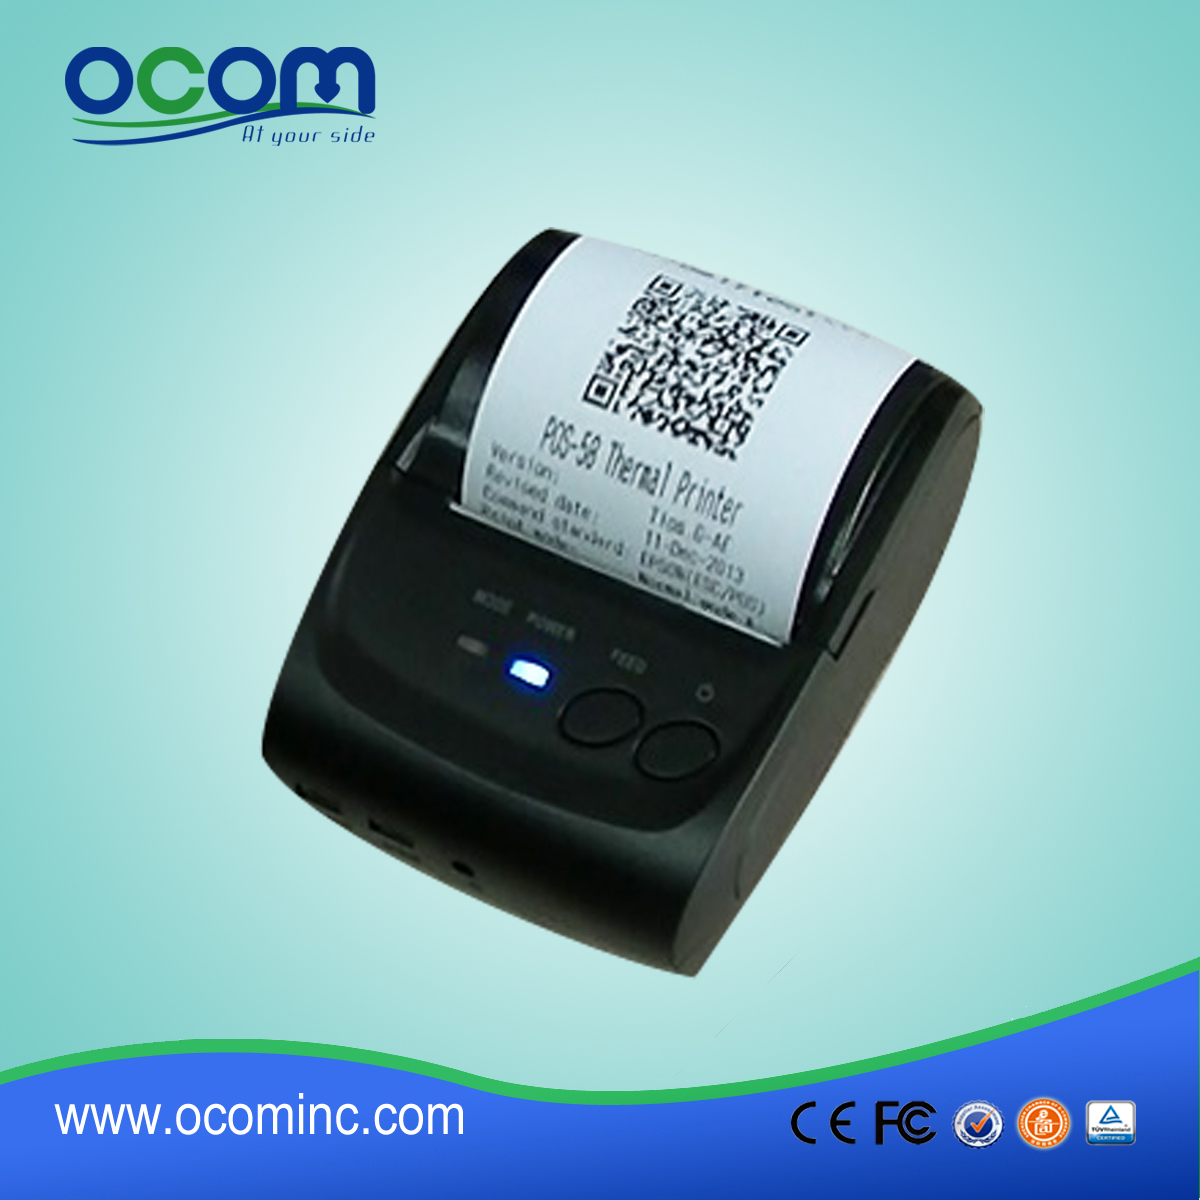 OCPP-M05: 58mm Android en IOS Portable Bluetooth thermische printer met Android SDK